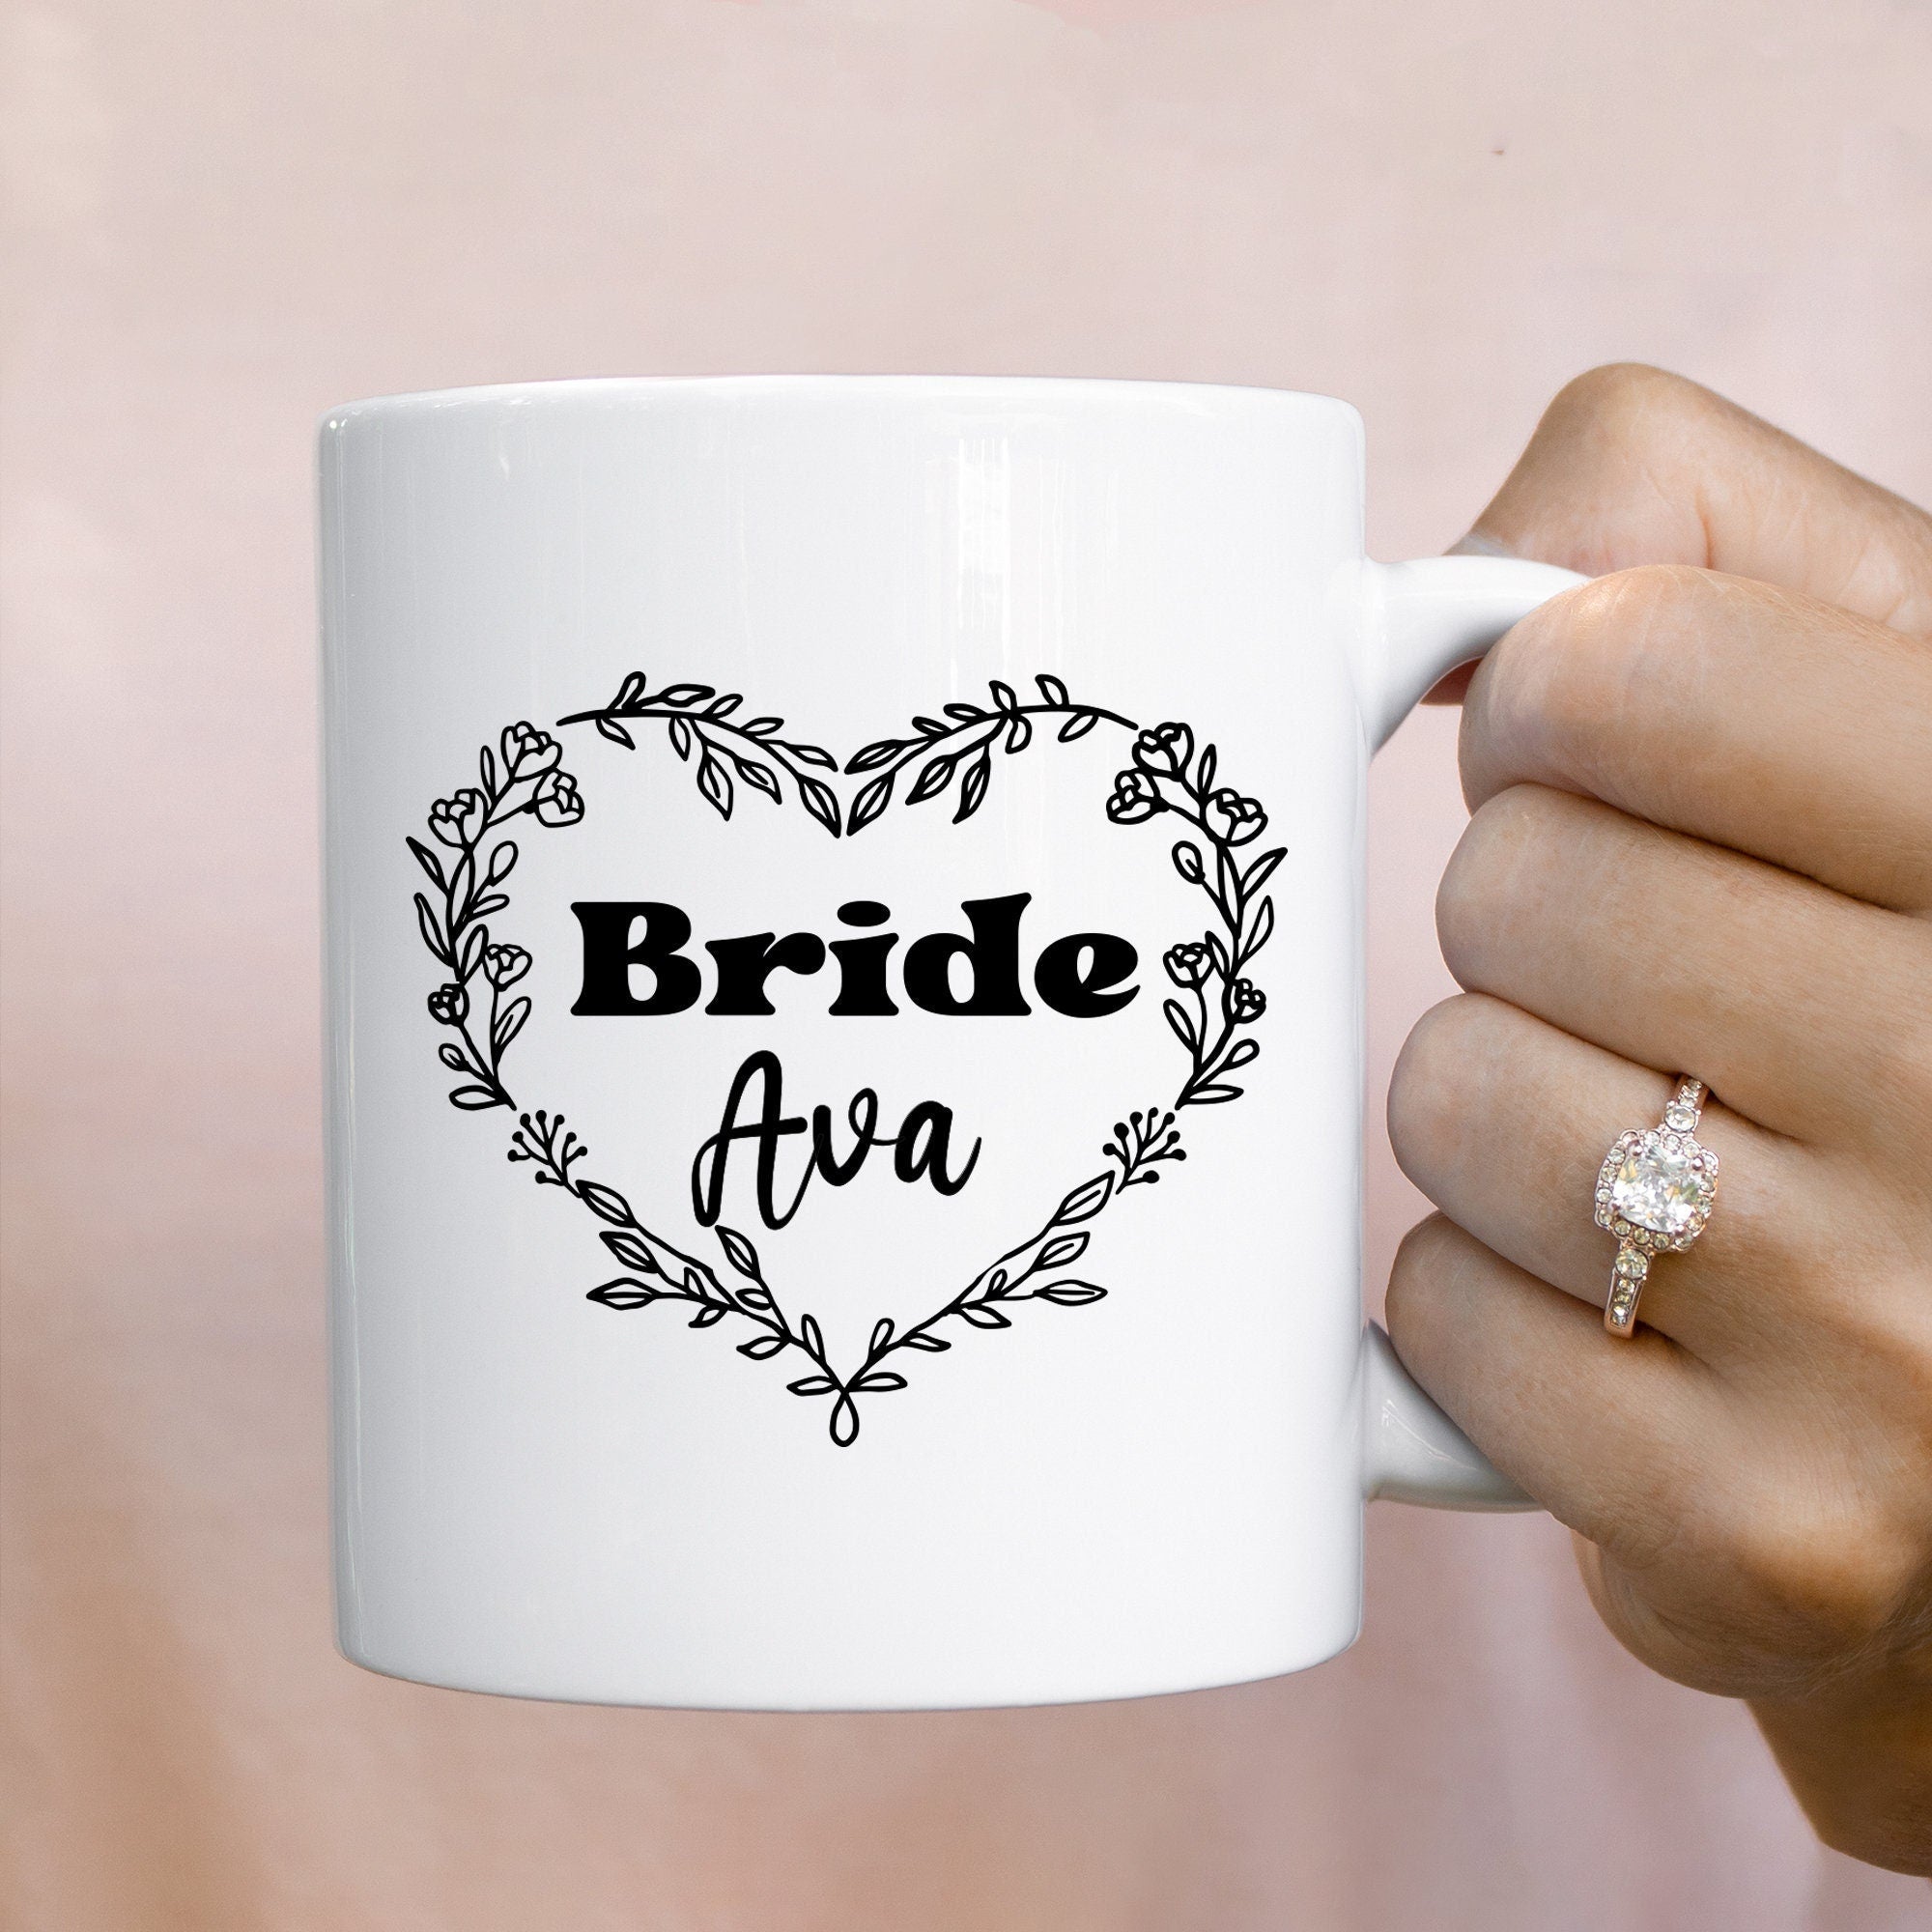 Personalised Bride Mug, Gift For The Bride, Bride To Be Mug, Engagement Gift